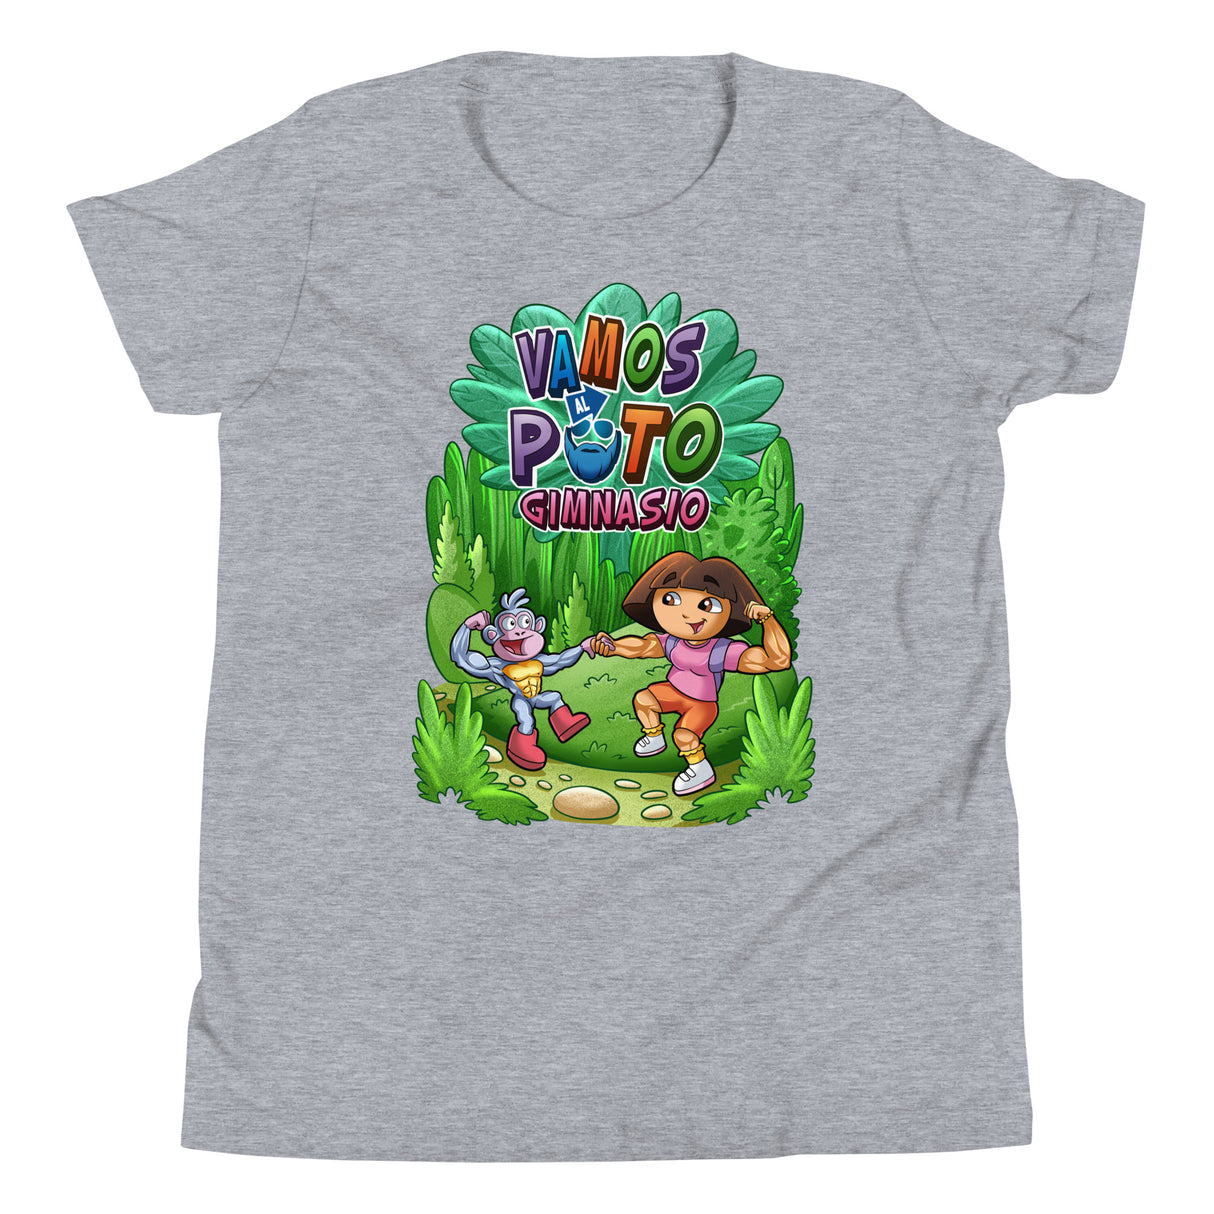 Vamos Al Puto Gimnasio Kids T-Shirt